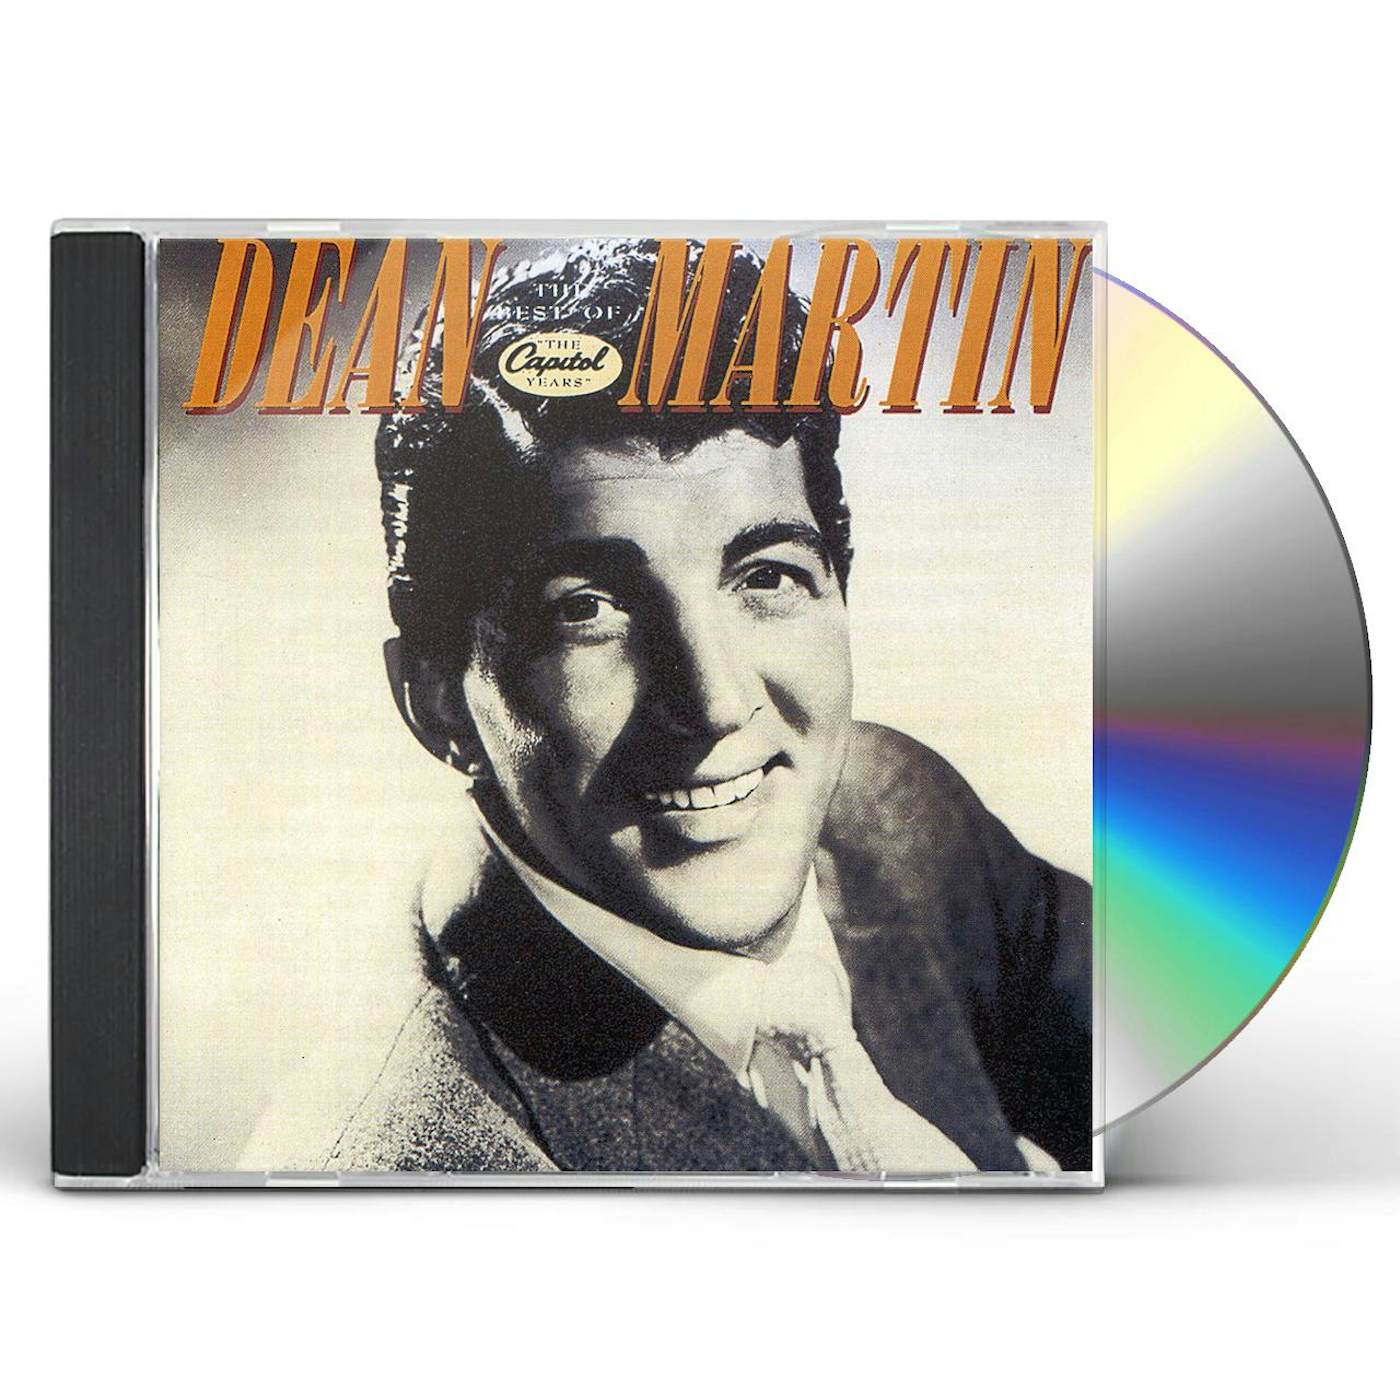 Dean Martin CAPITOL YEARS CD